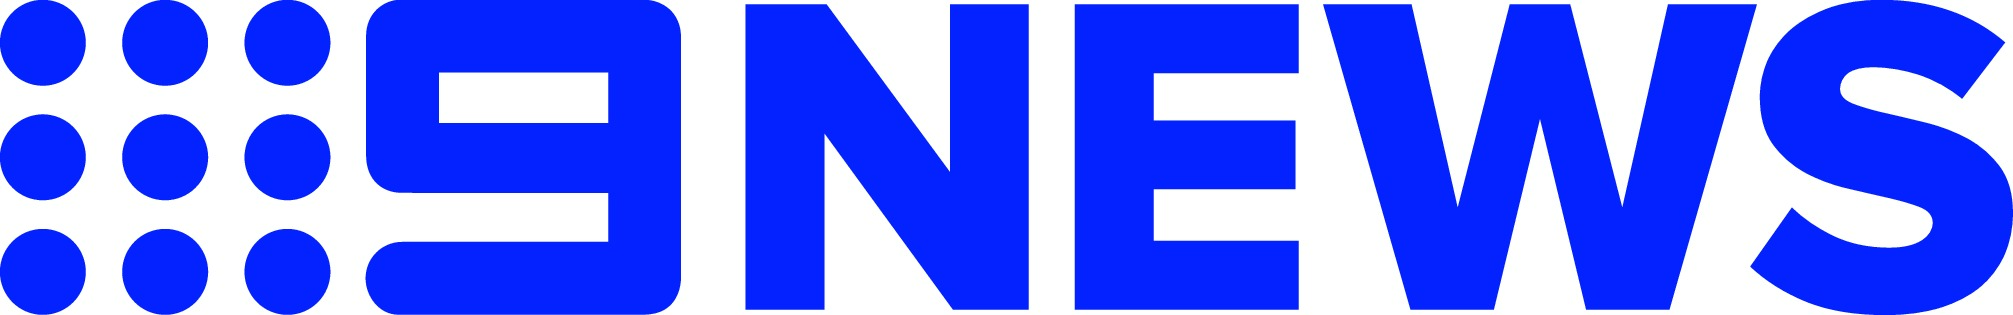 Nine News logo